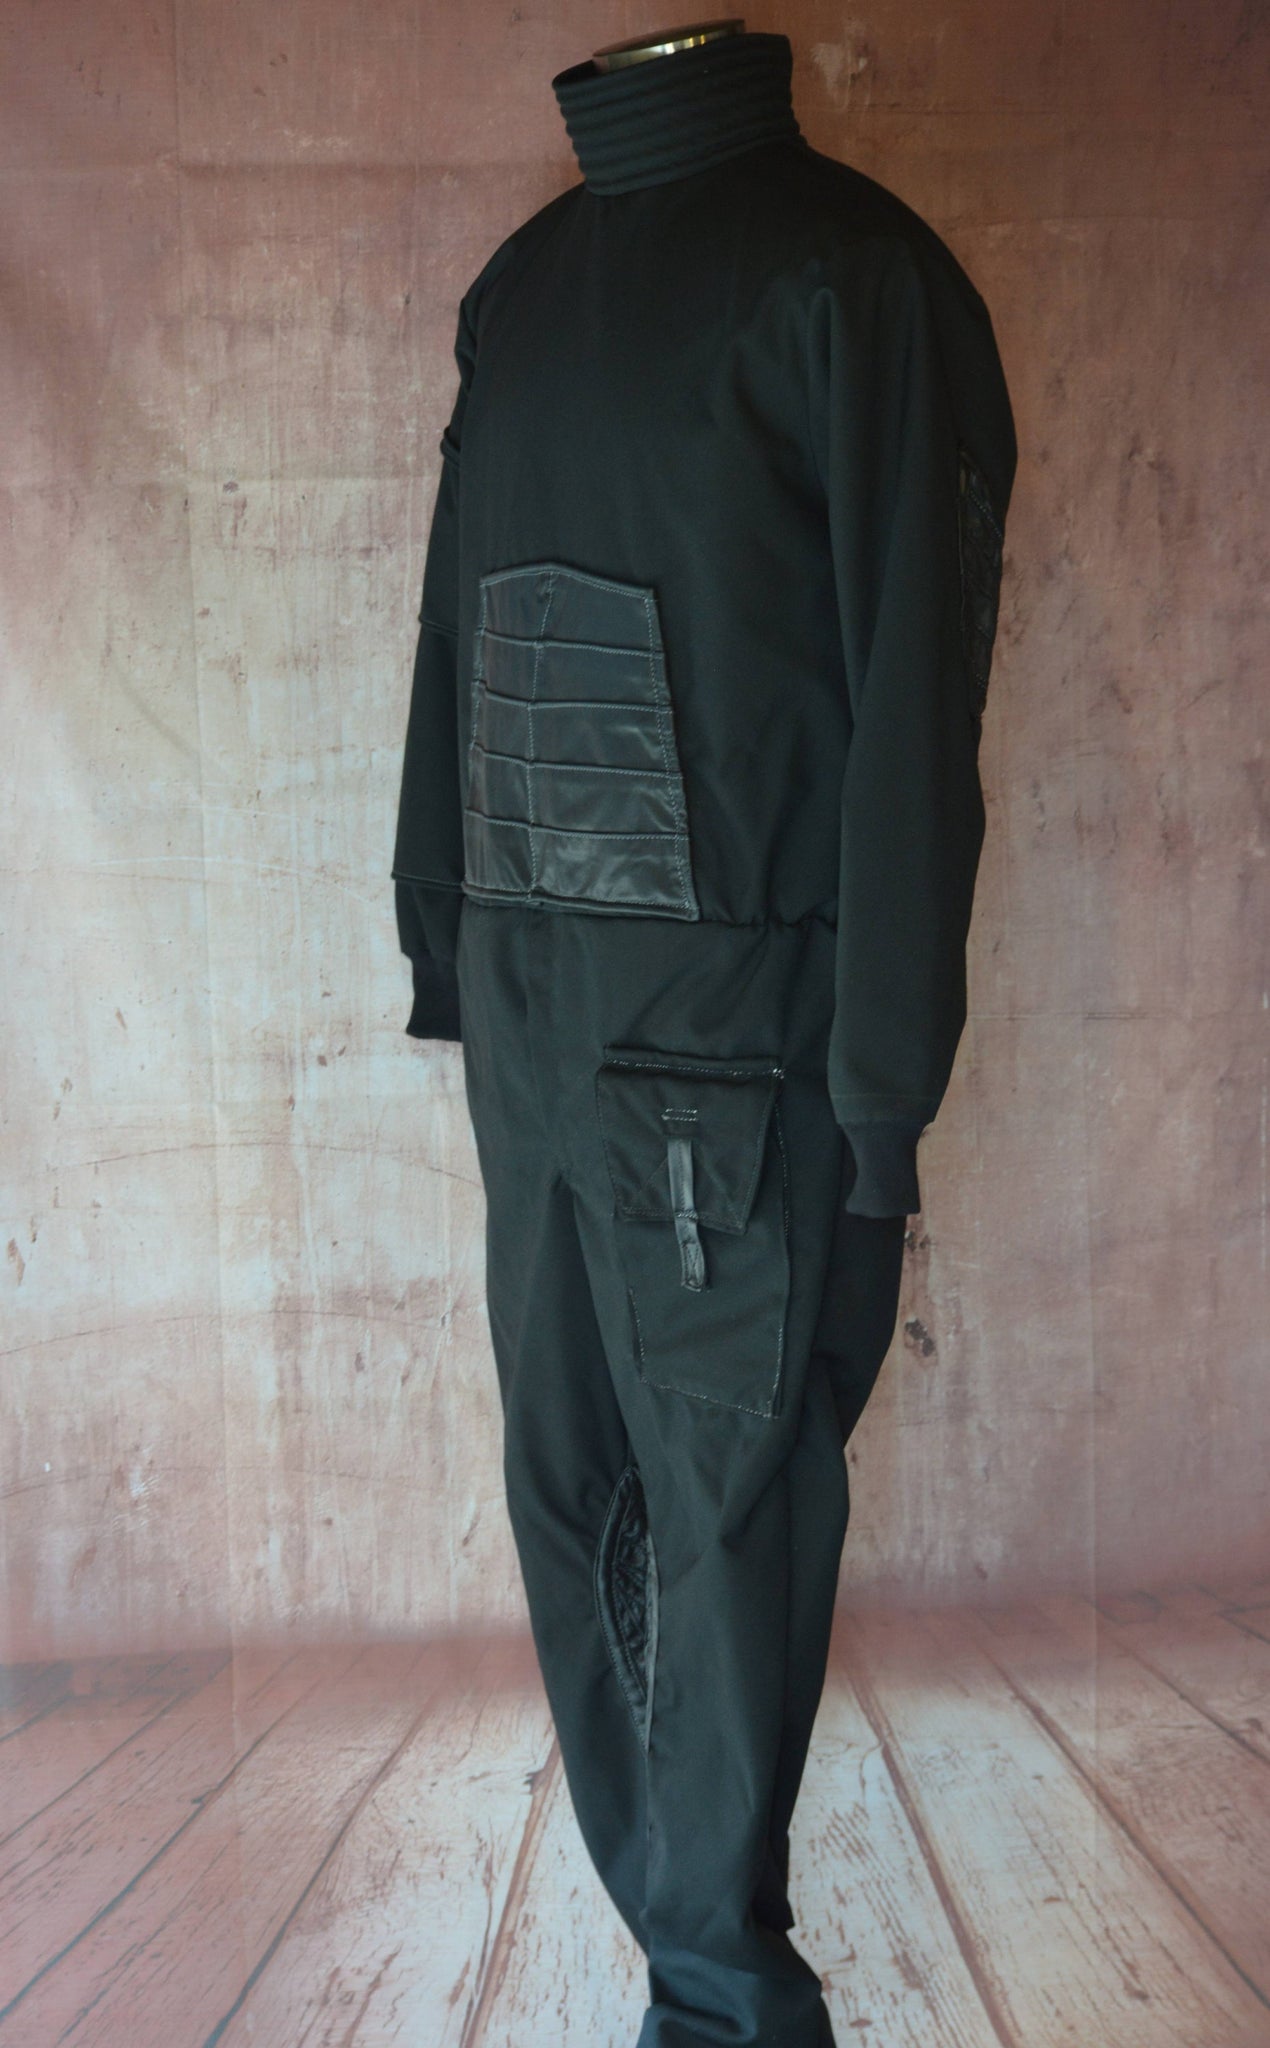 Jumpsuit Mercs Star wars Make Your Own Mandalorian style flight suit